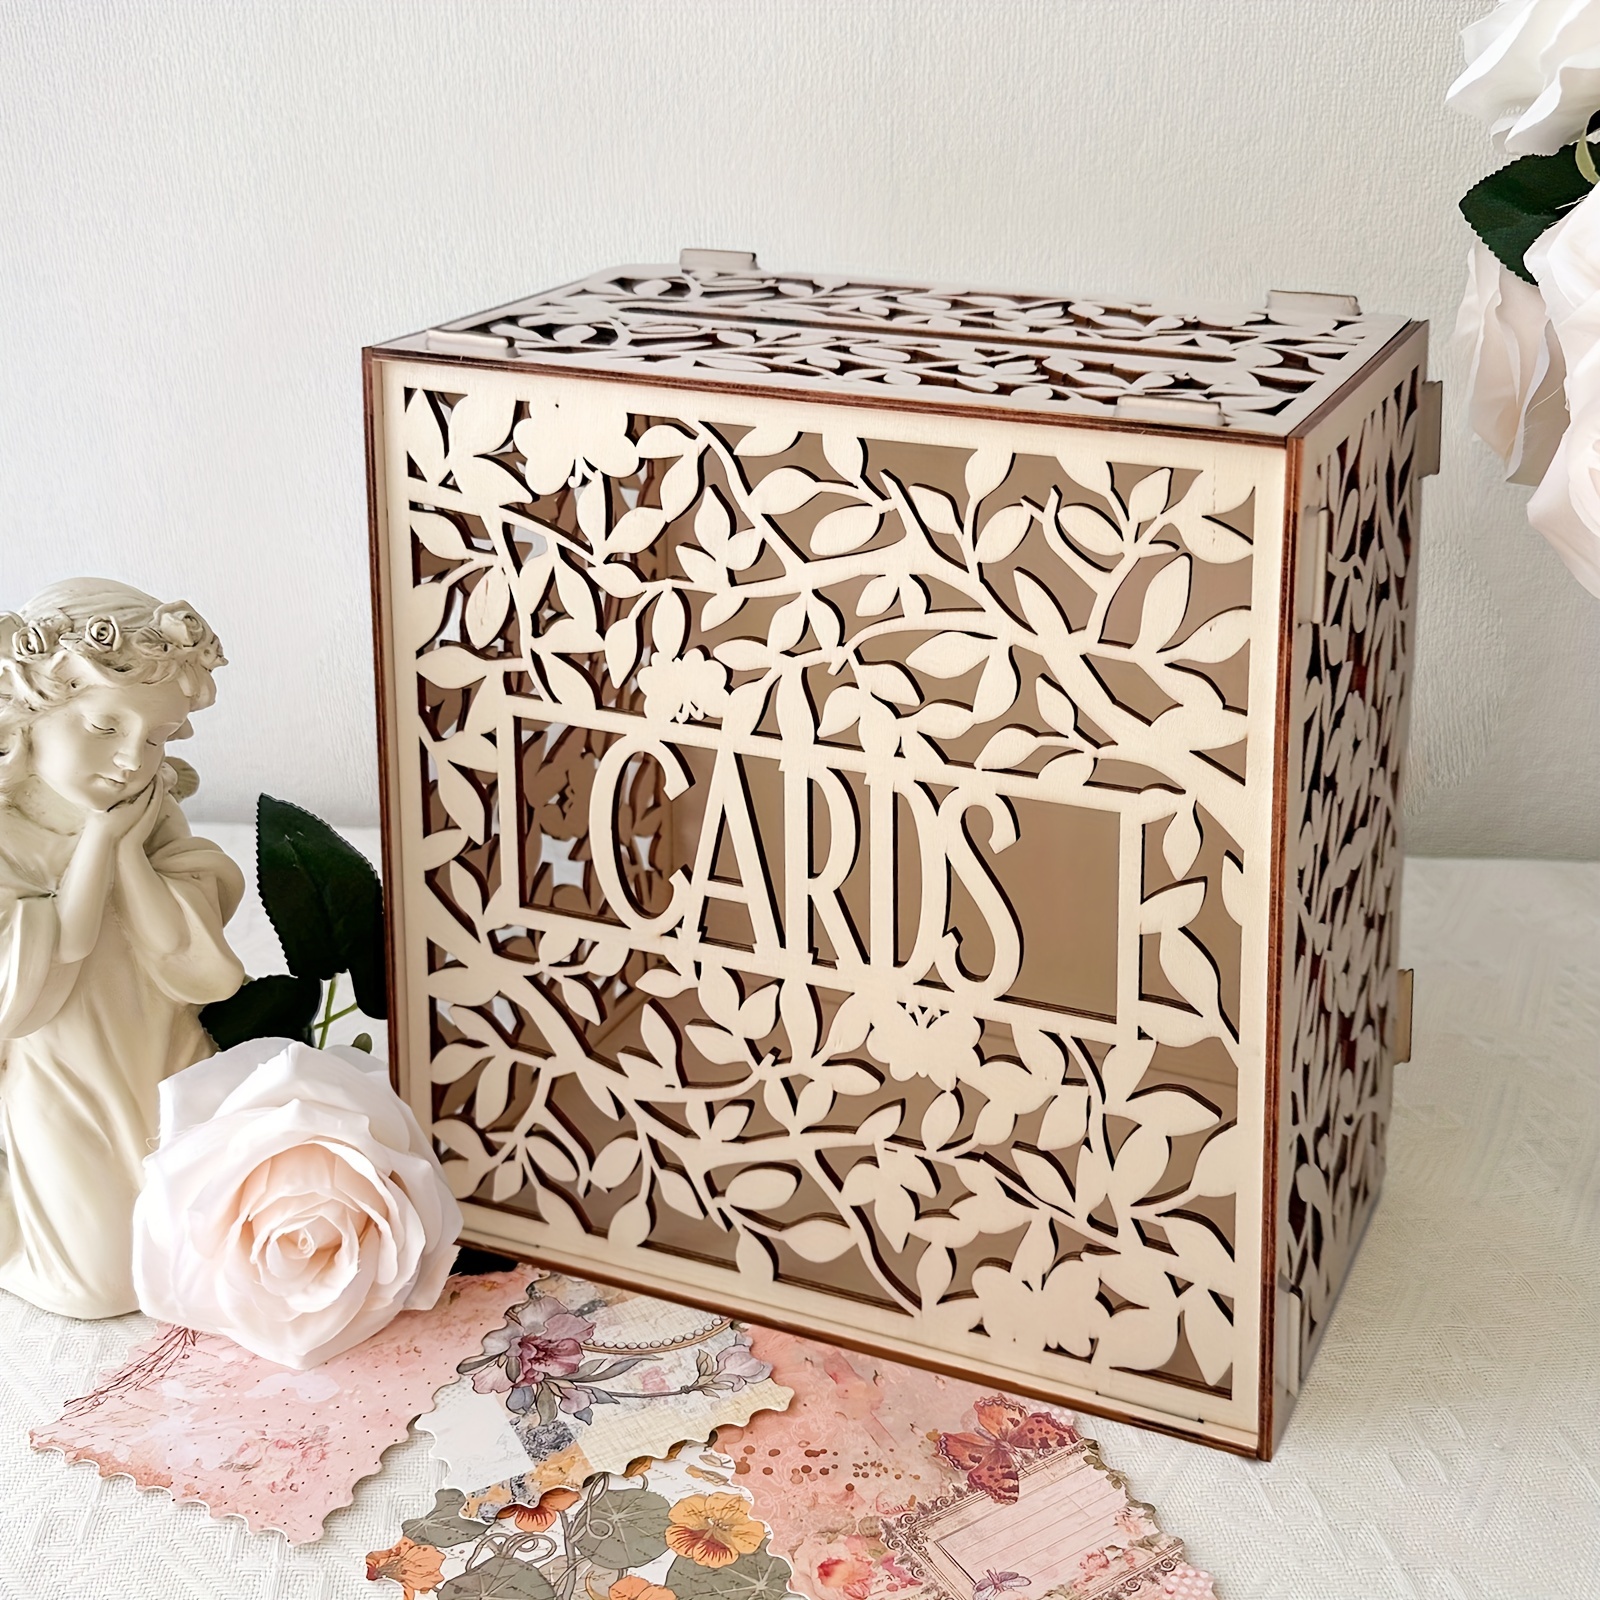 Custom Printed Wedding Card Boxes :: Gifts, Envelope, Decorative